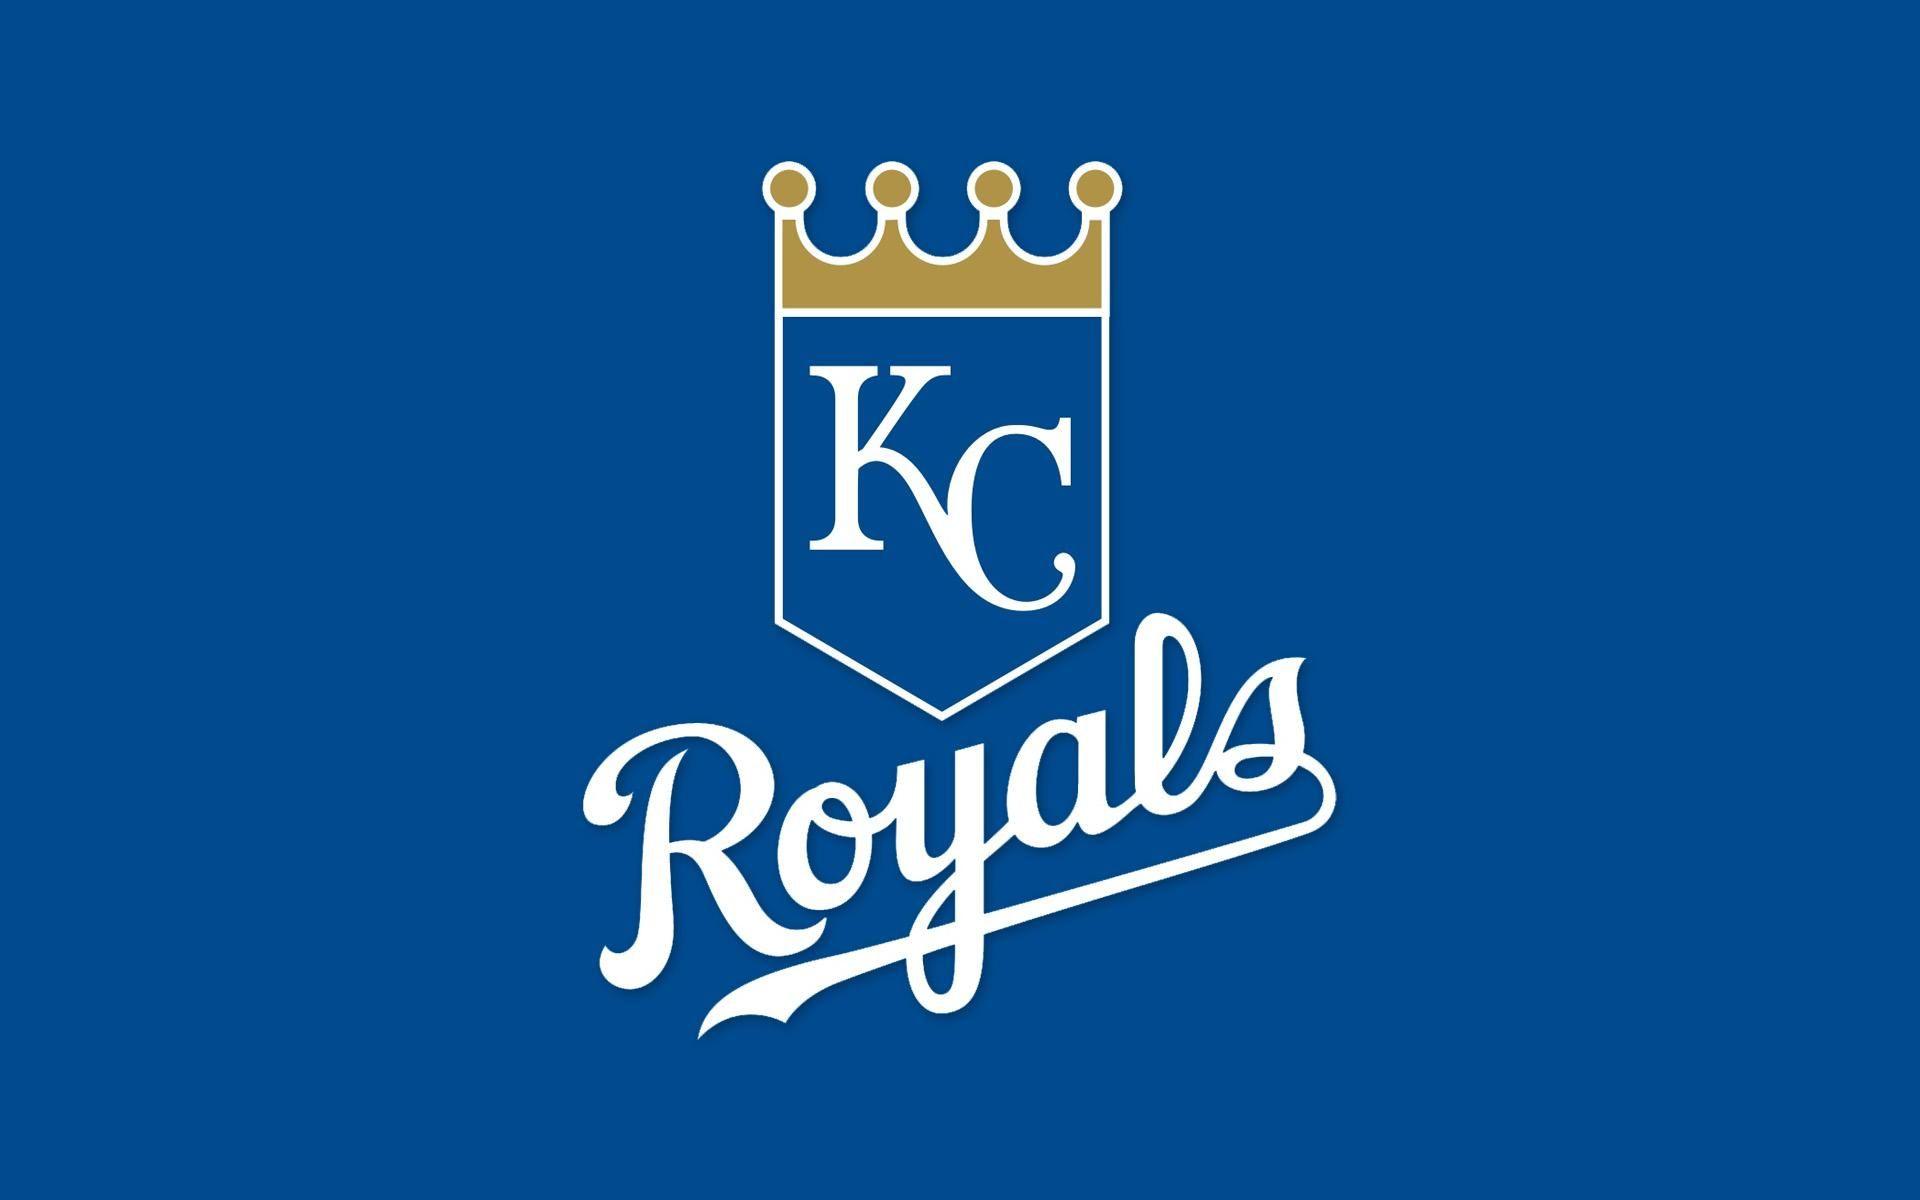 Kansas City Royals Wallpaper & Browser Themes to Get Pumped